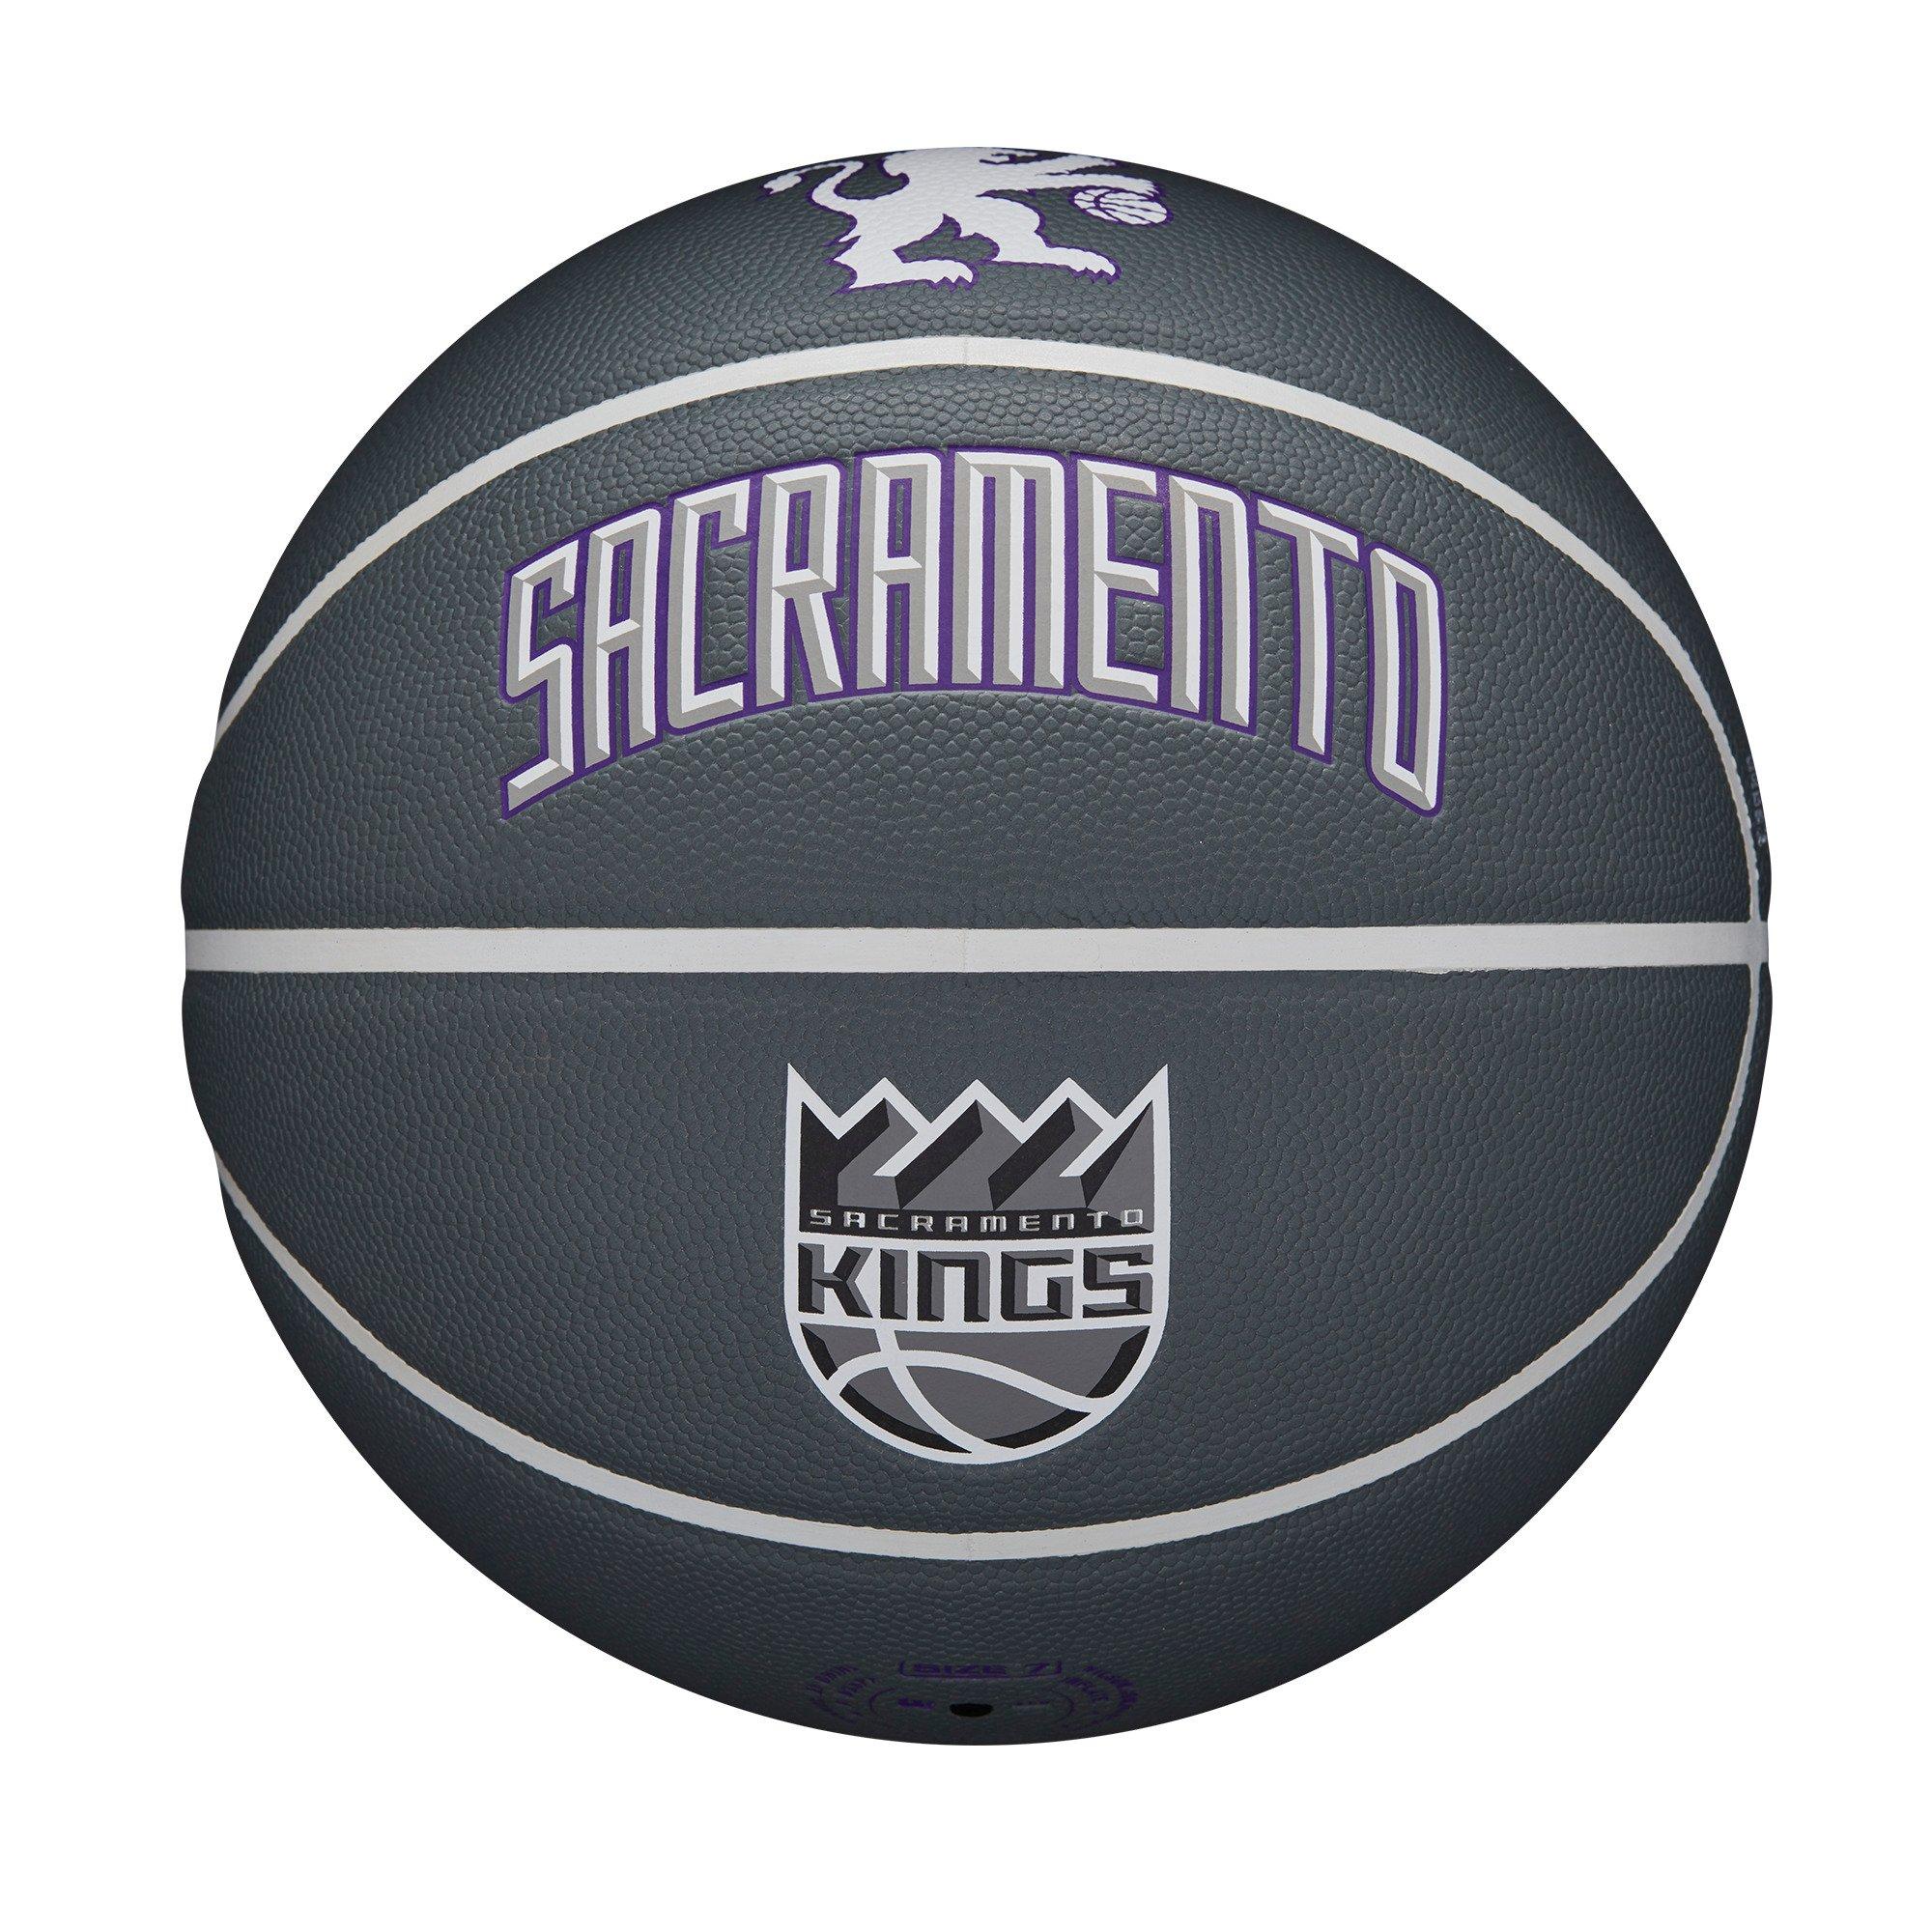 Order your Sacramento Kings Nike City Edition gear today